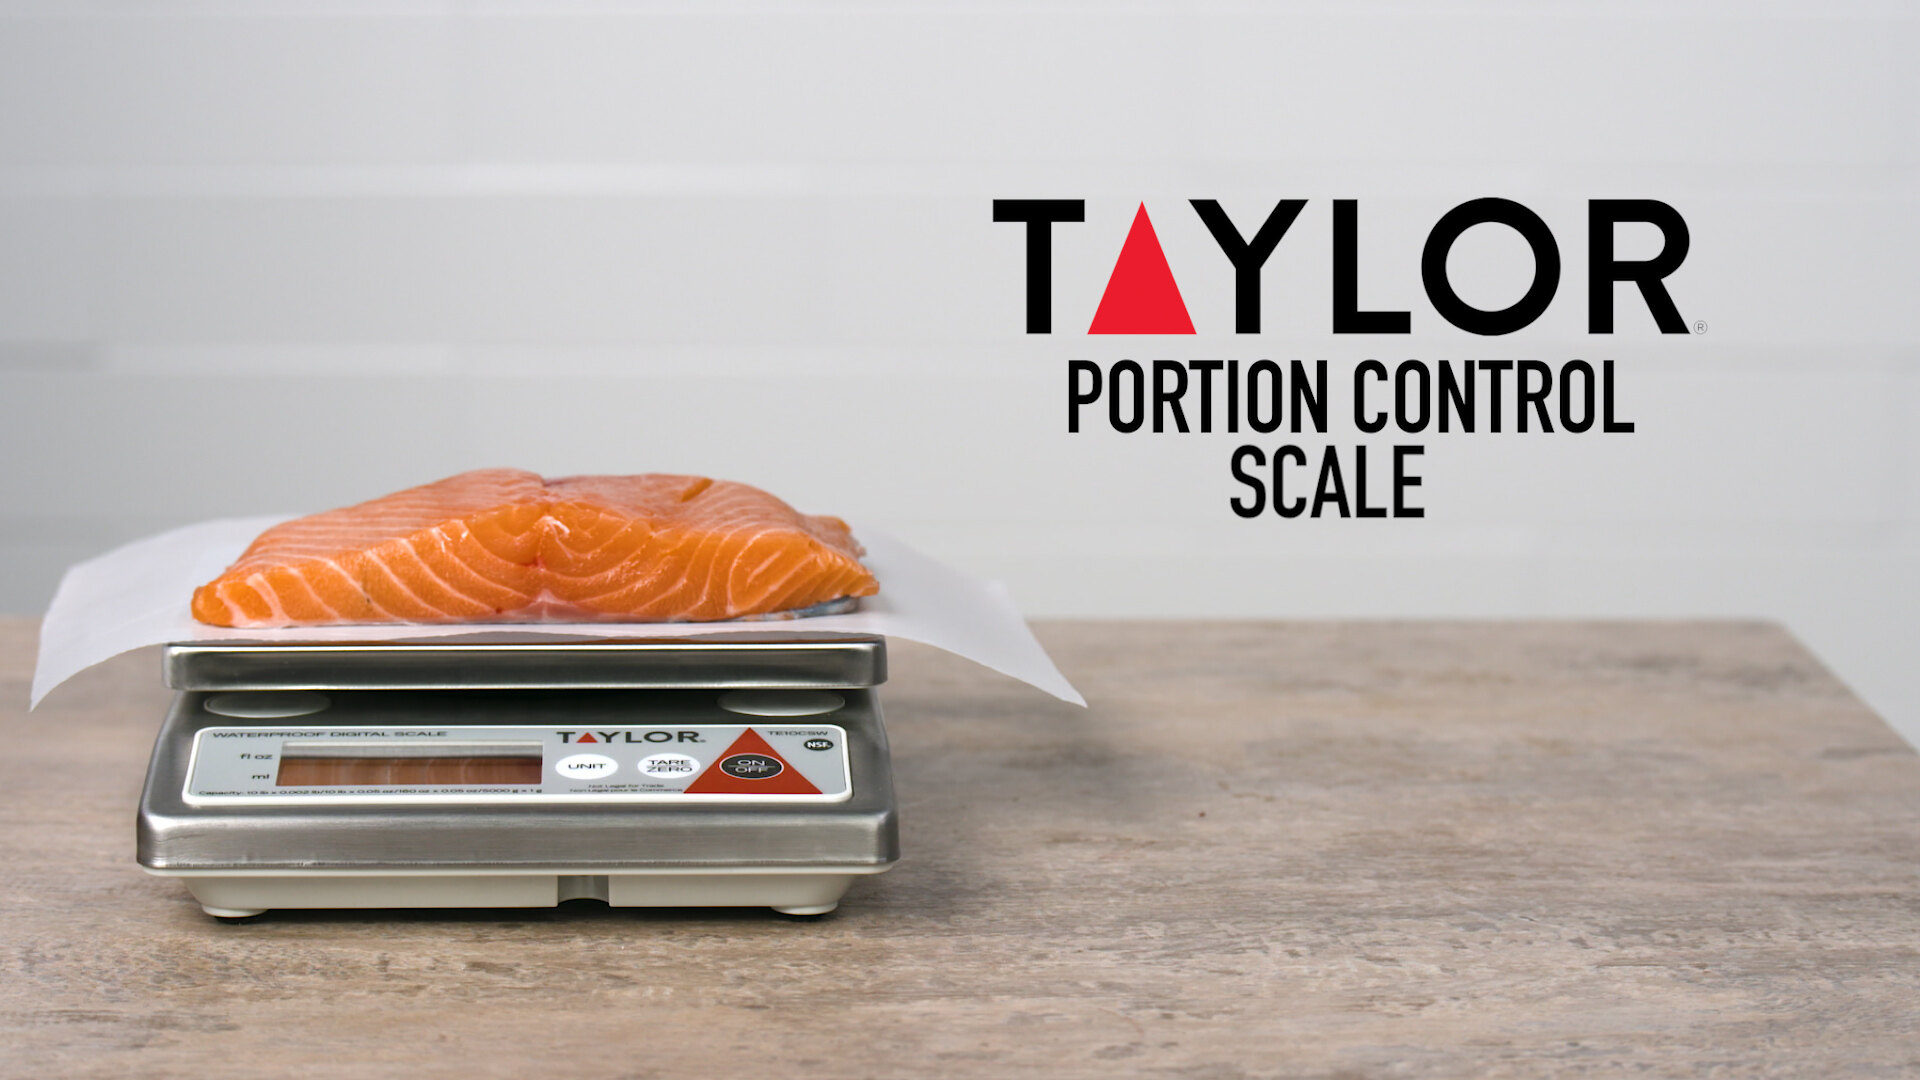 Taylor 5282002 High Capacity Waterproof Digital Scale, 30 lb - Win